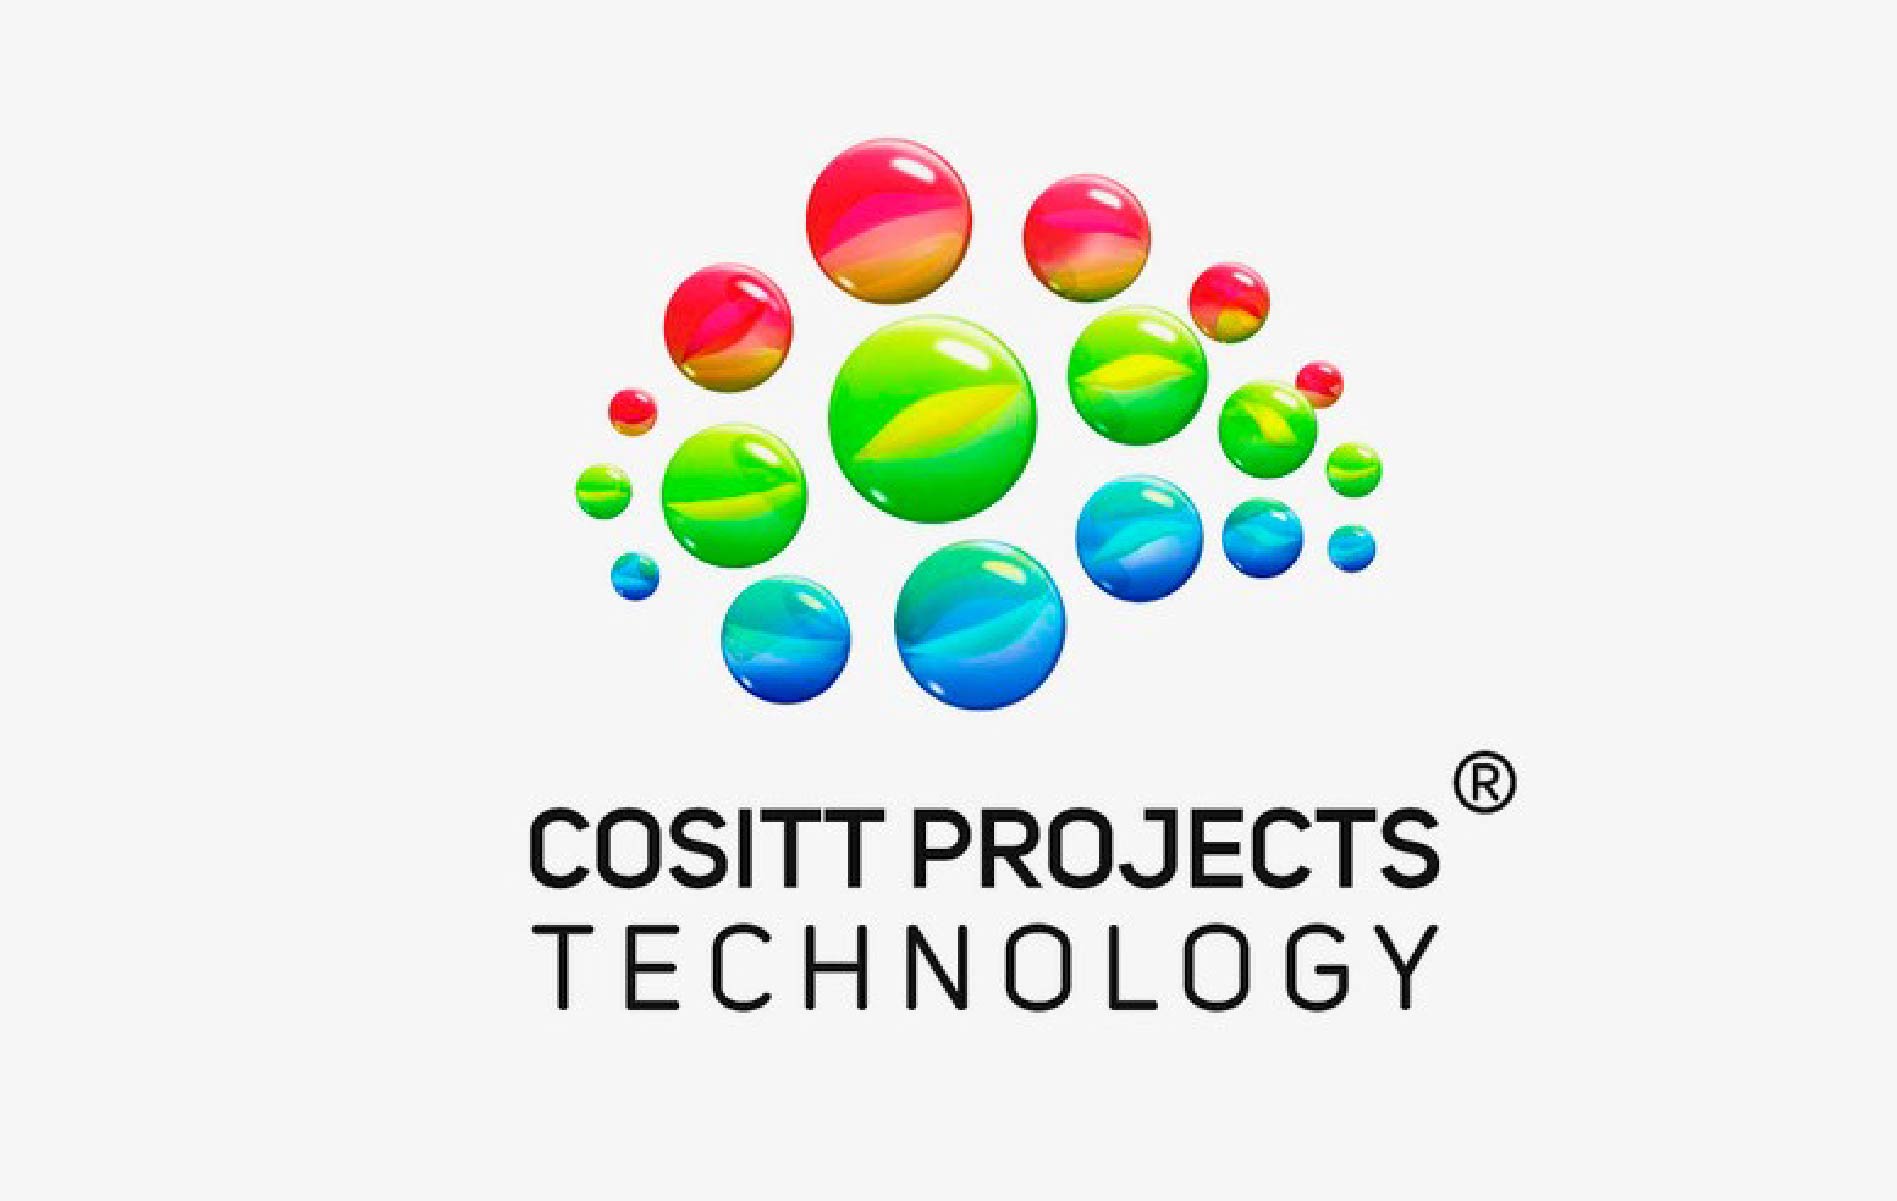 Acuerdo colaboración Cositt Projects Technology